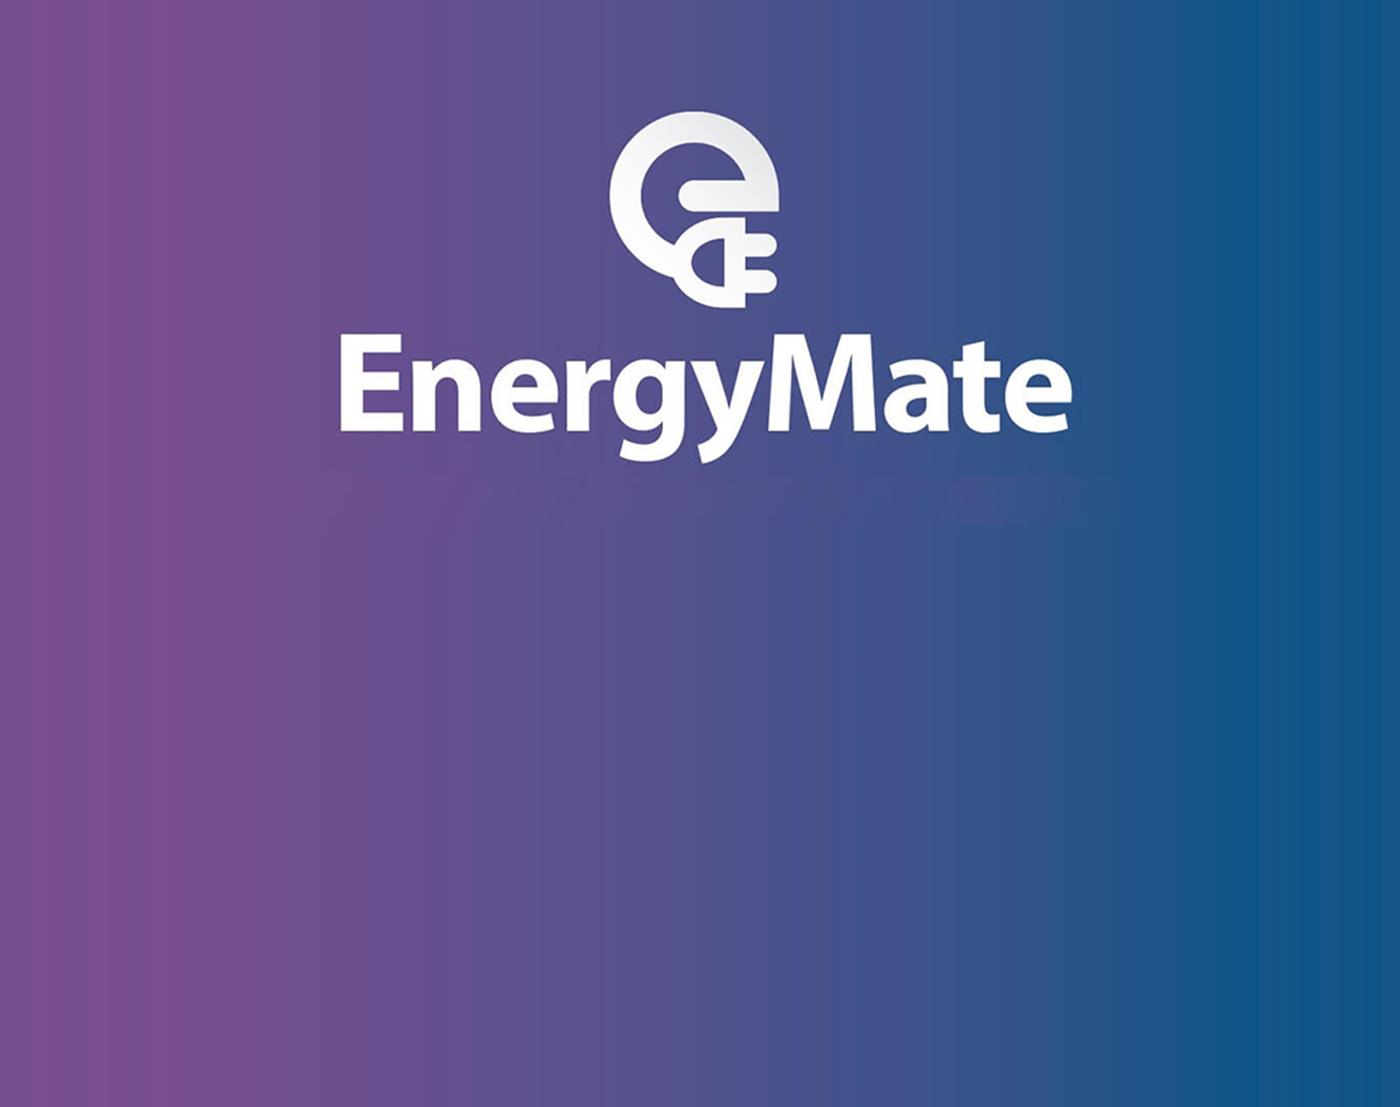 Energy mate logo